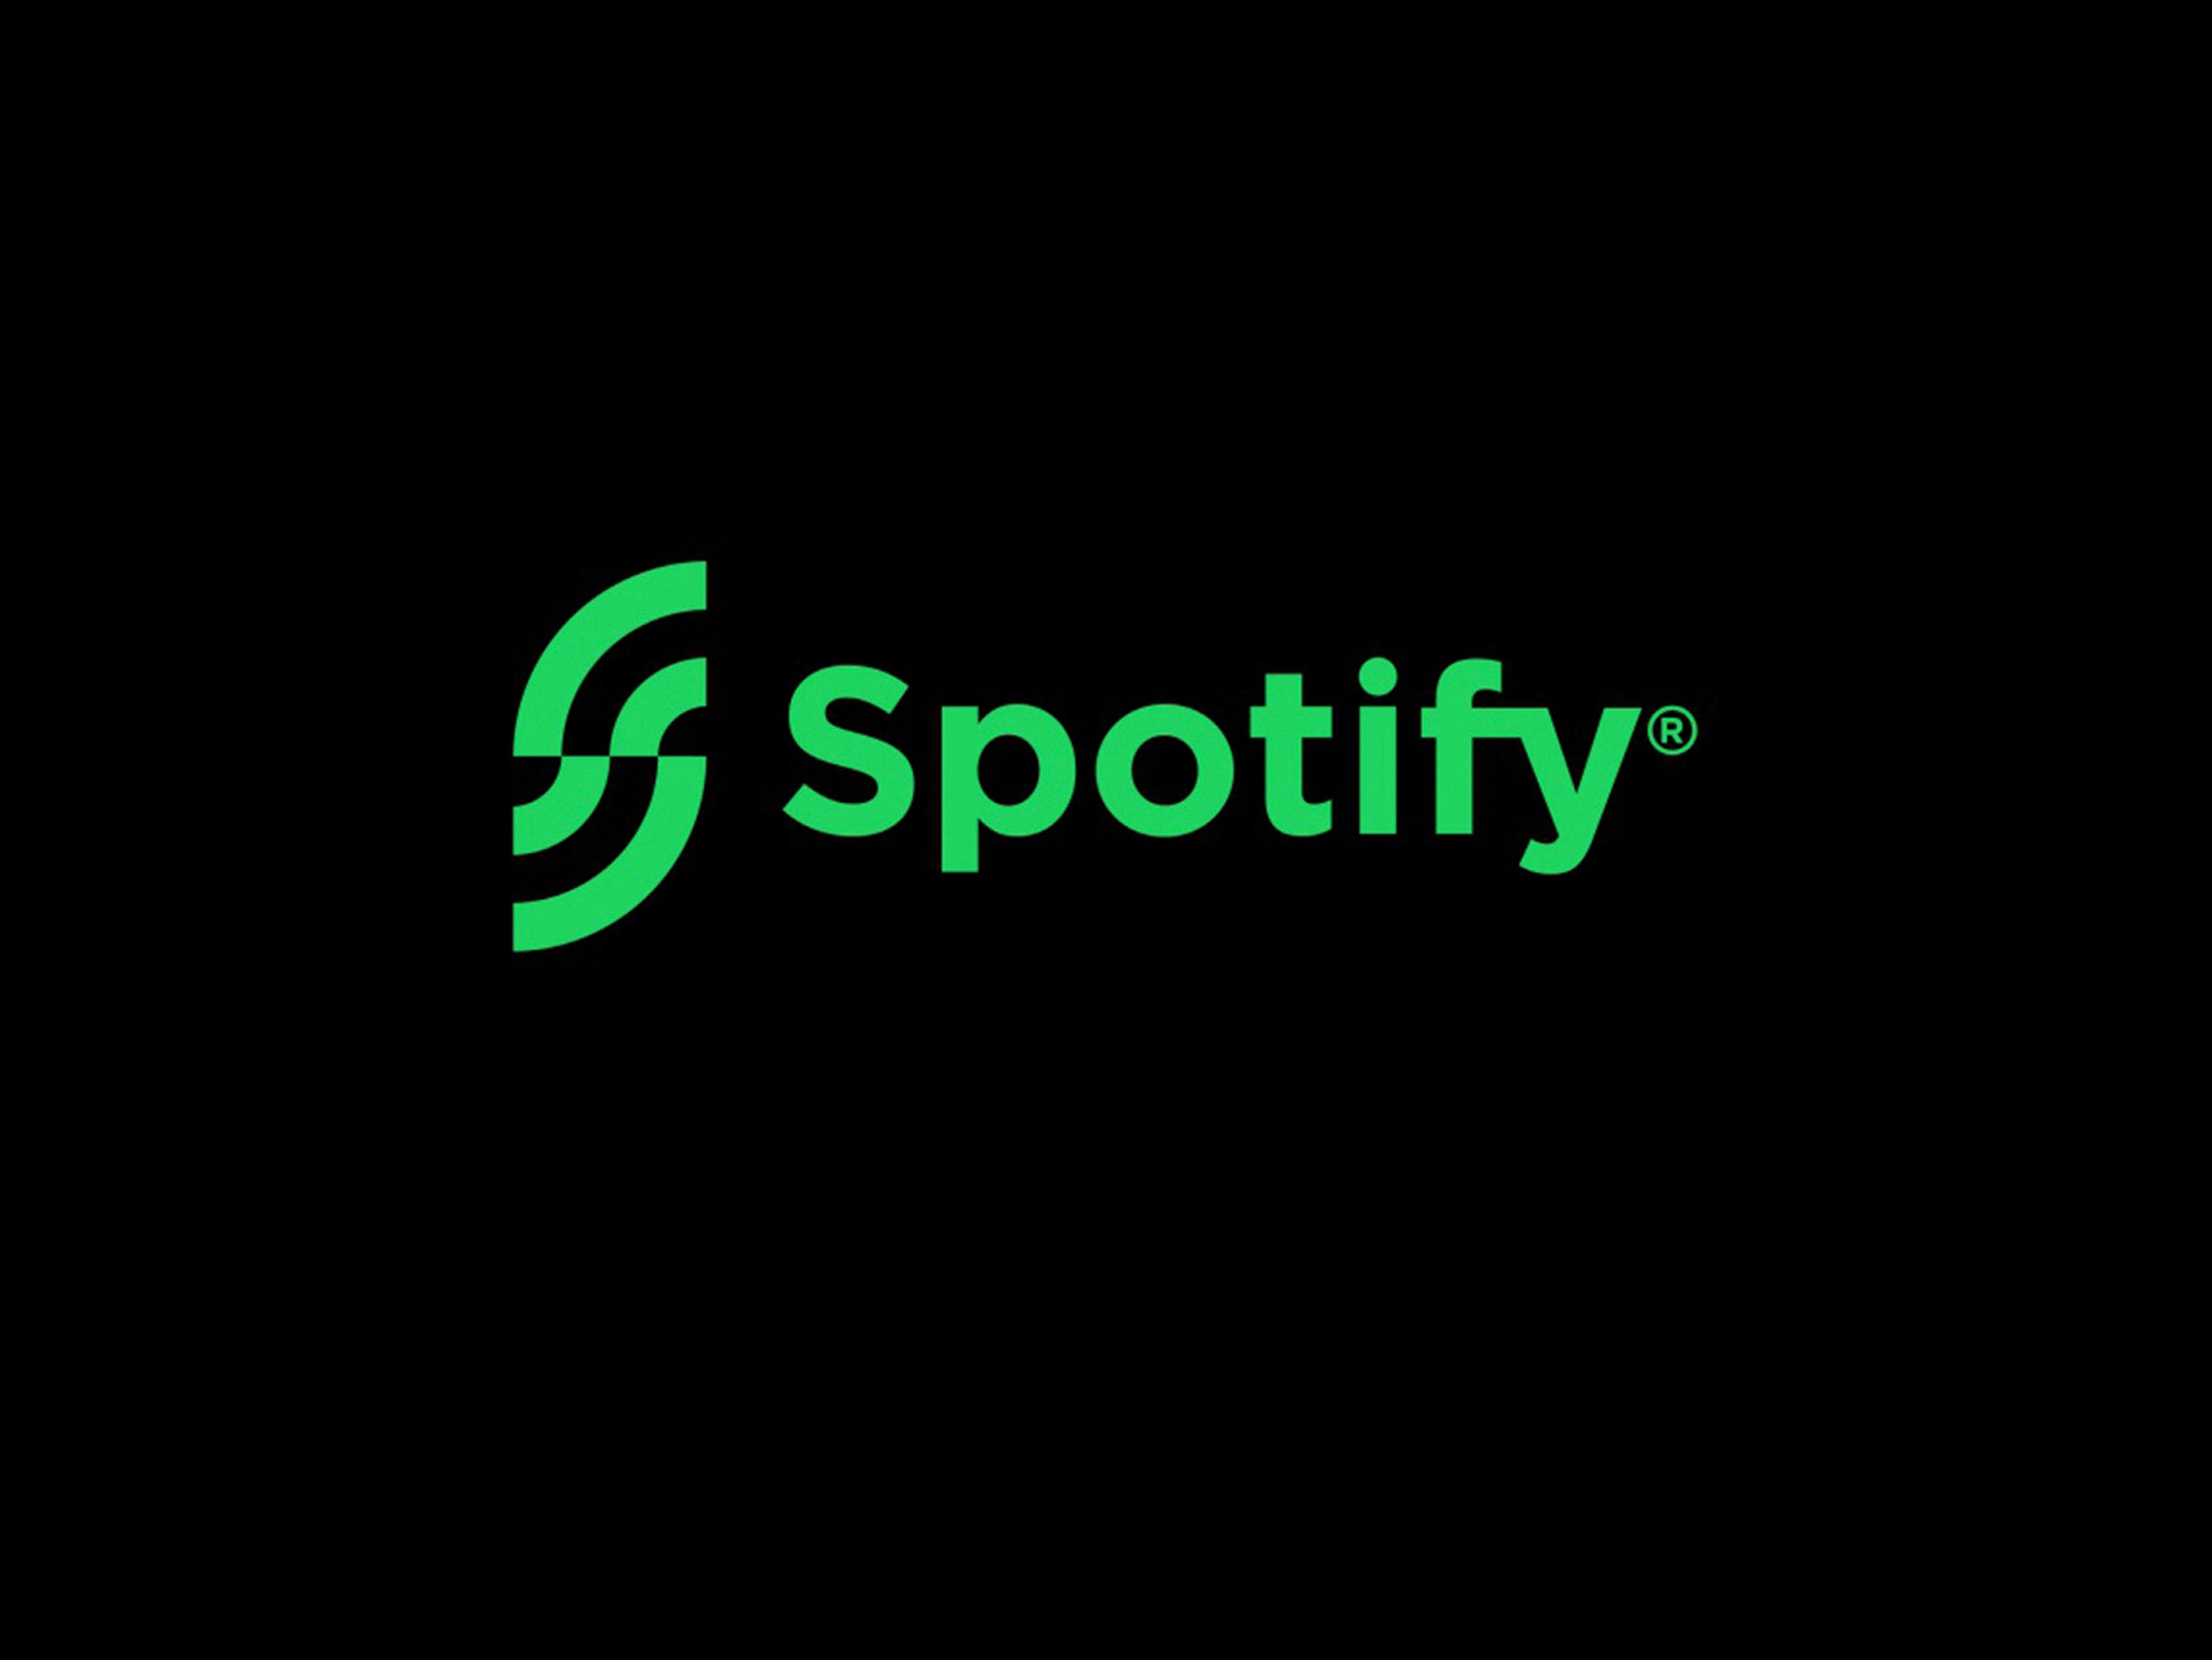 SPOTIFY LOGO DESIGN, Custom Professional Spotify Logo Design. Unique Spotify  Logo for Your Business -  Canada